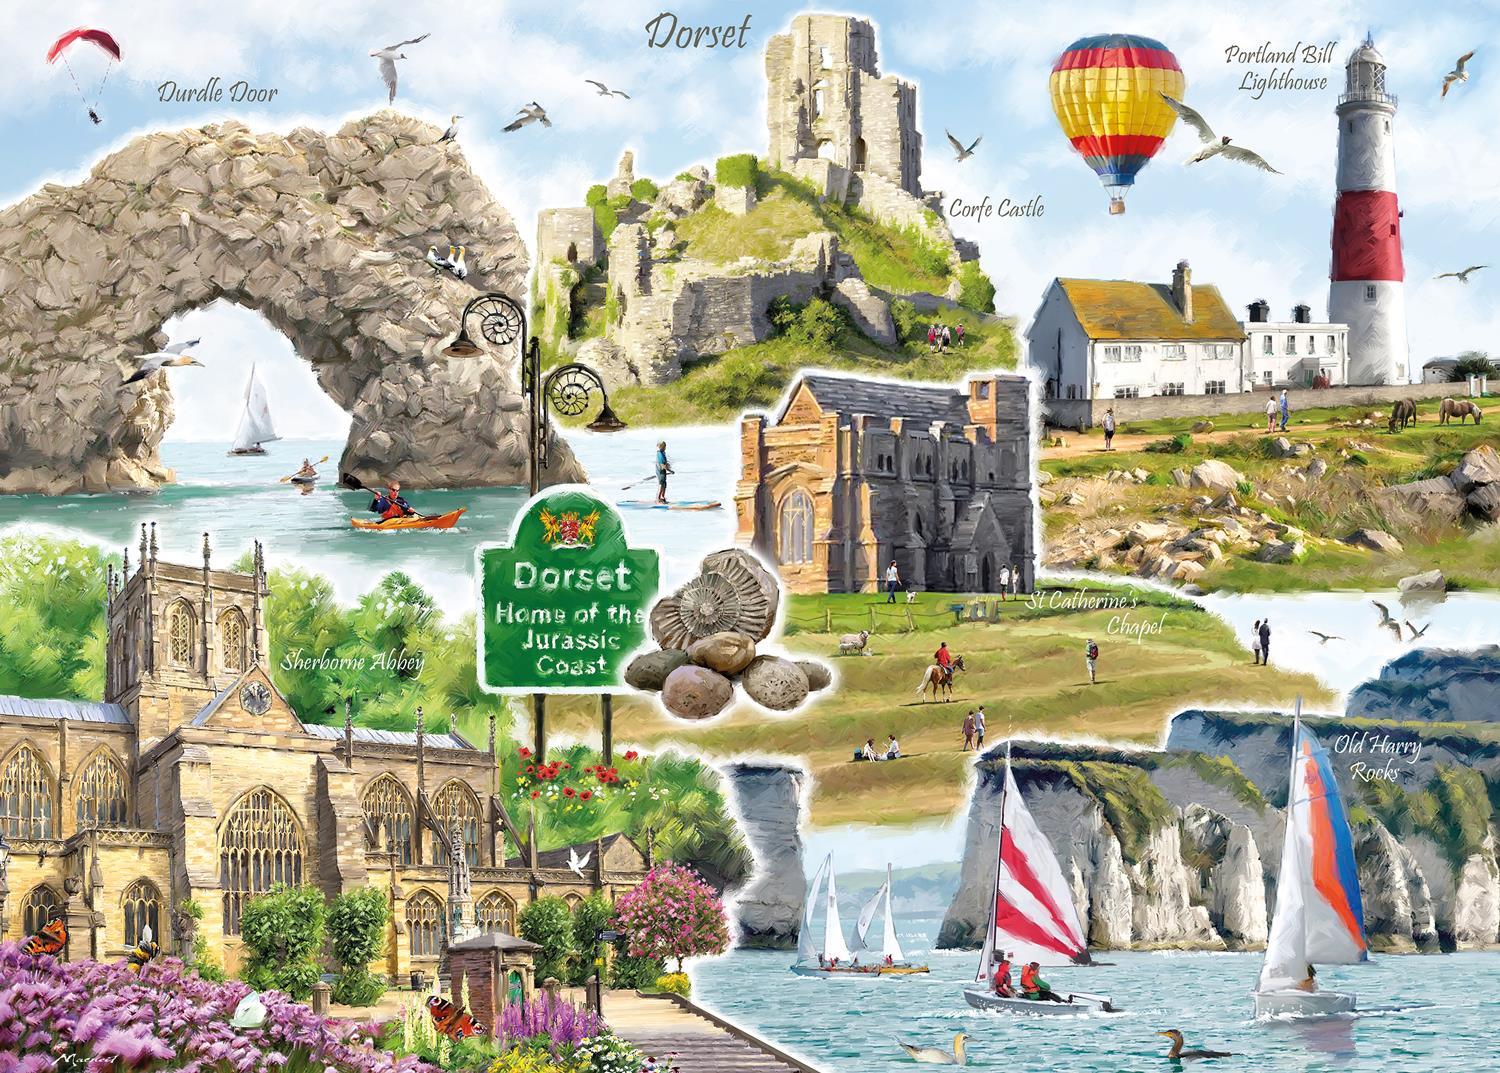 Otter House Dorset Montage Jigsaw Puzzle (1000 Pieces)